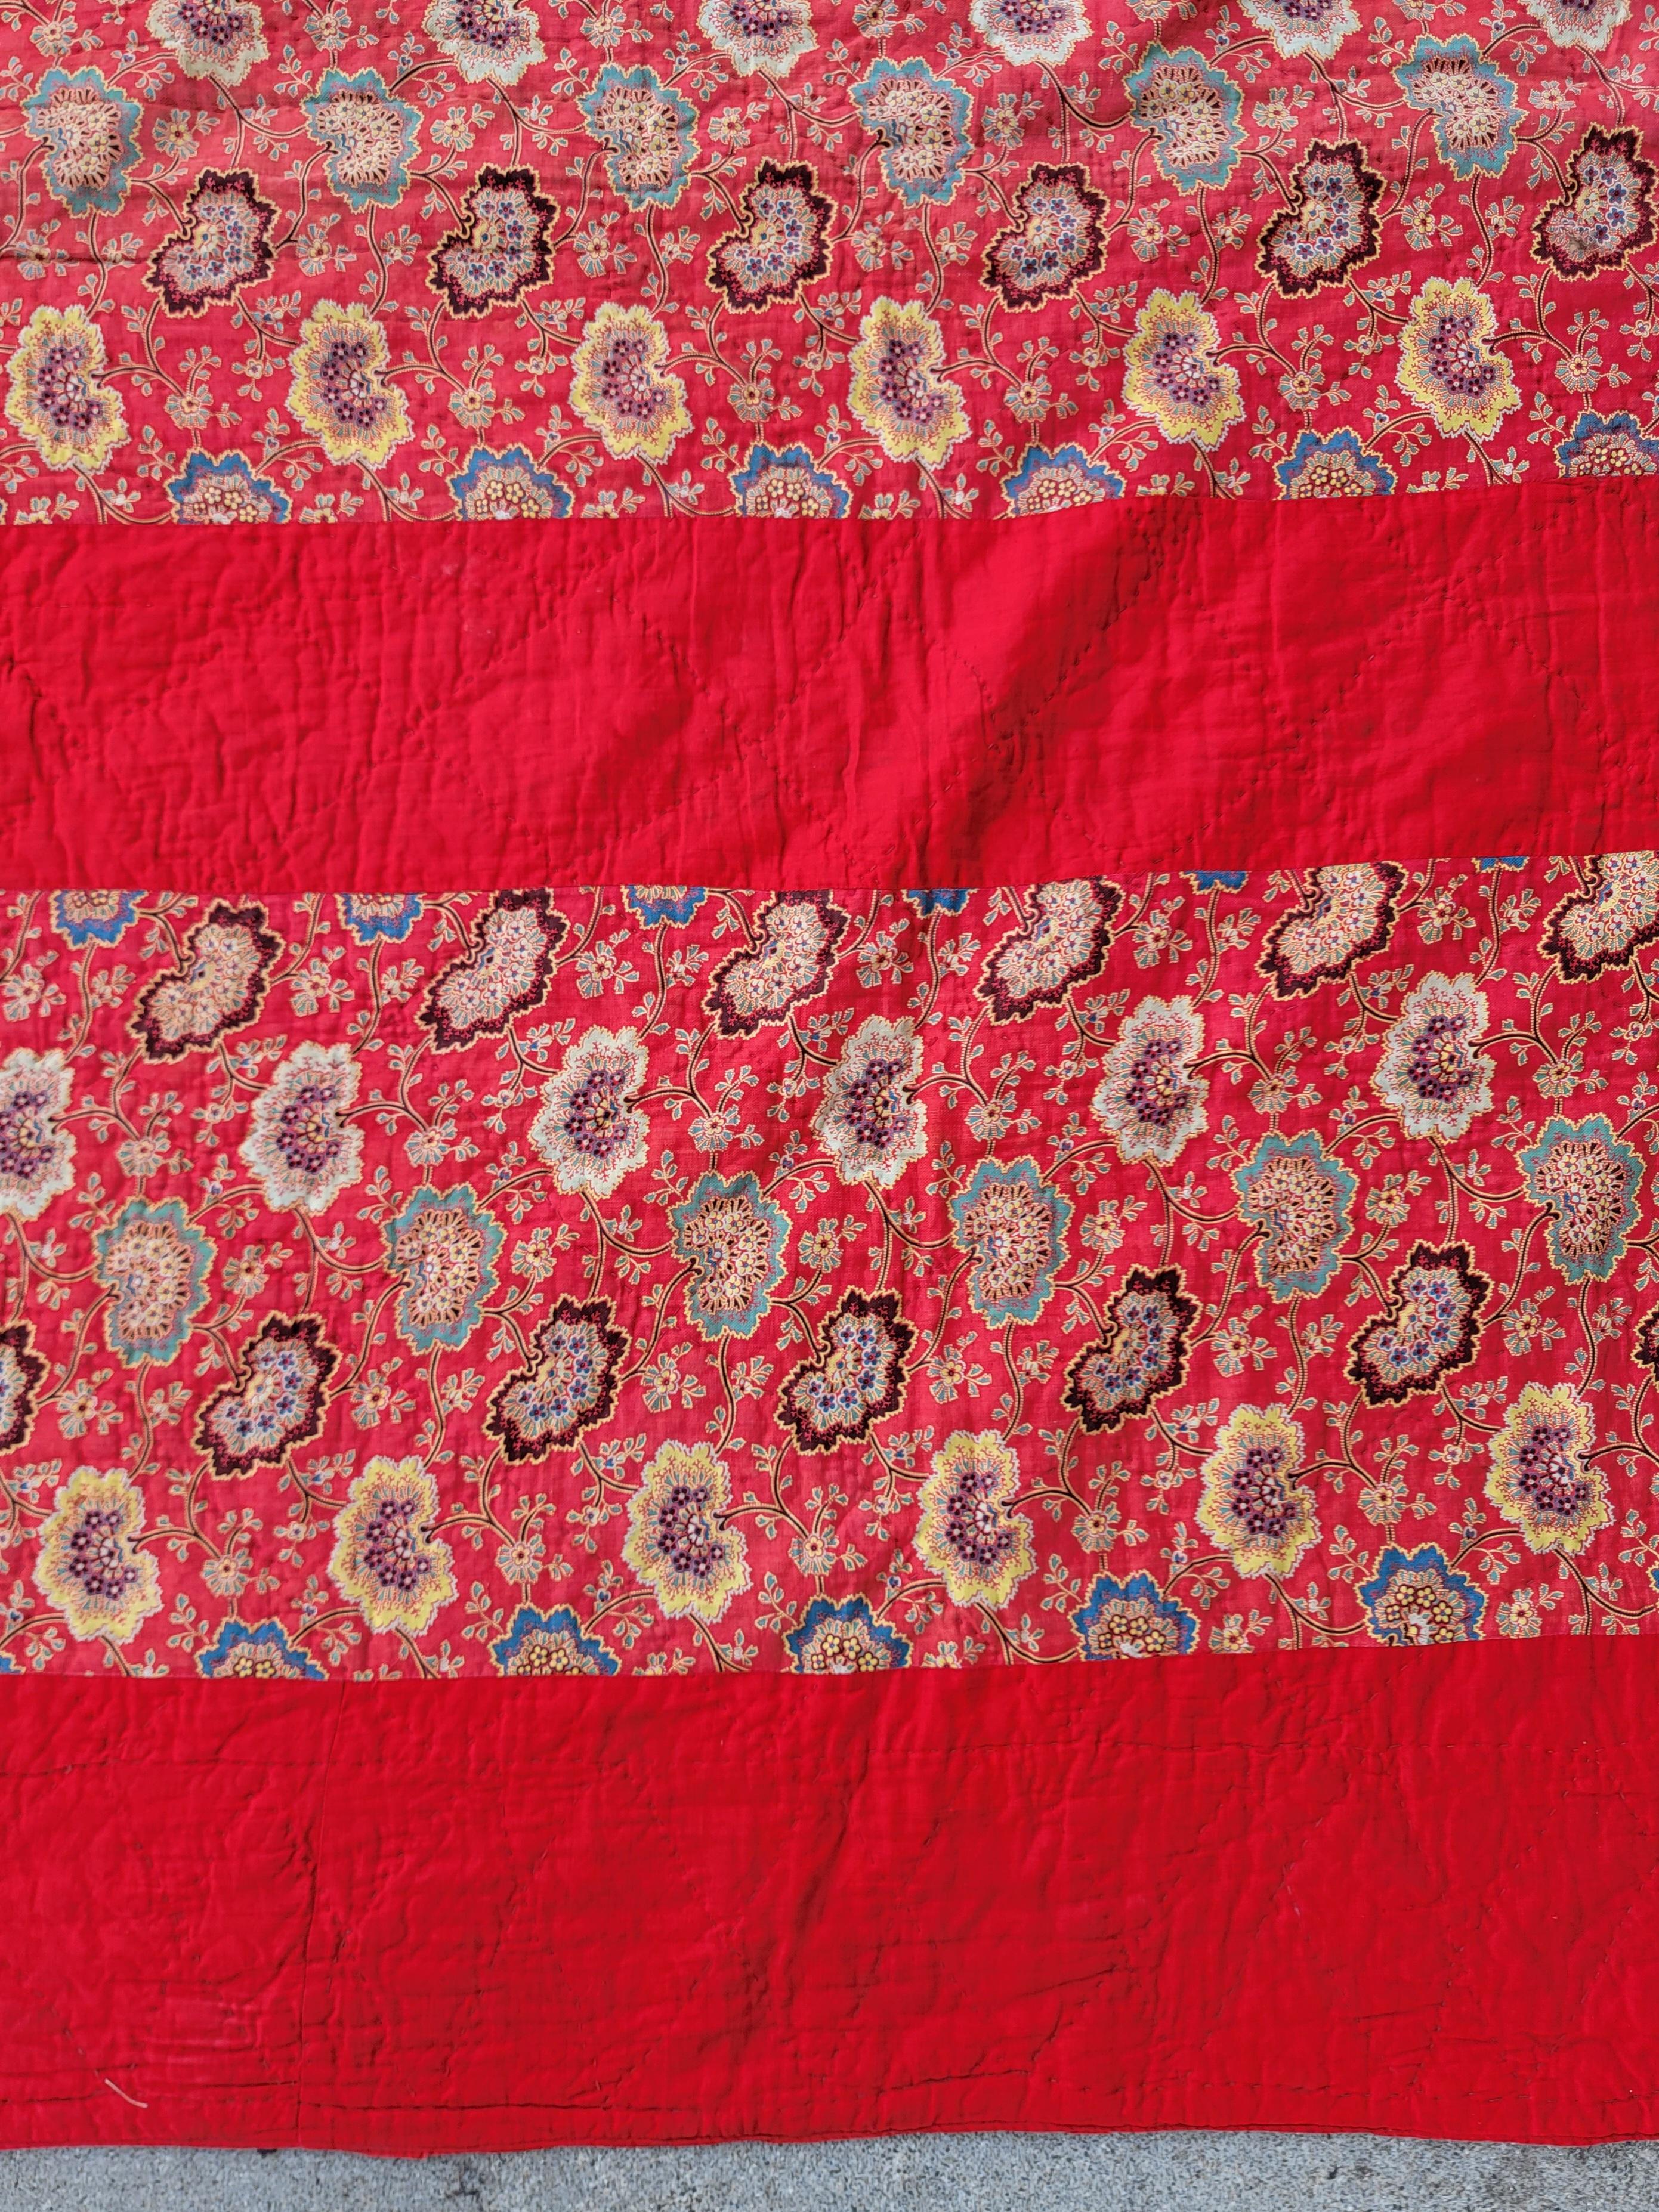 19Thc British Wool Flag Quilt 2